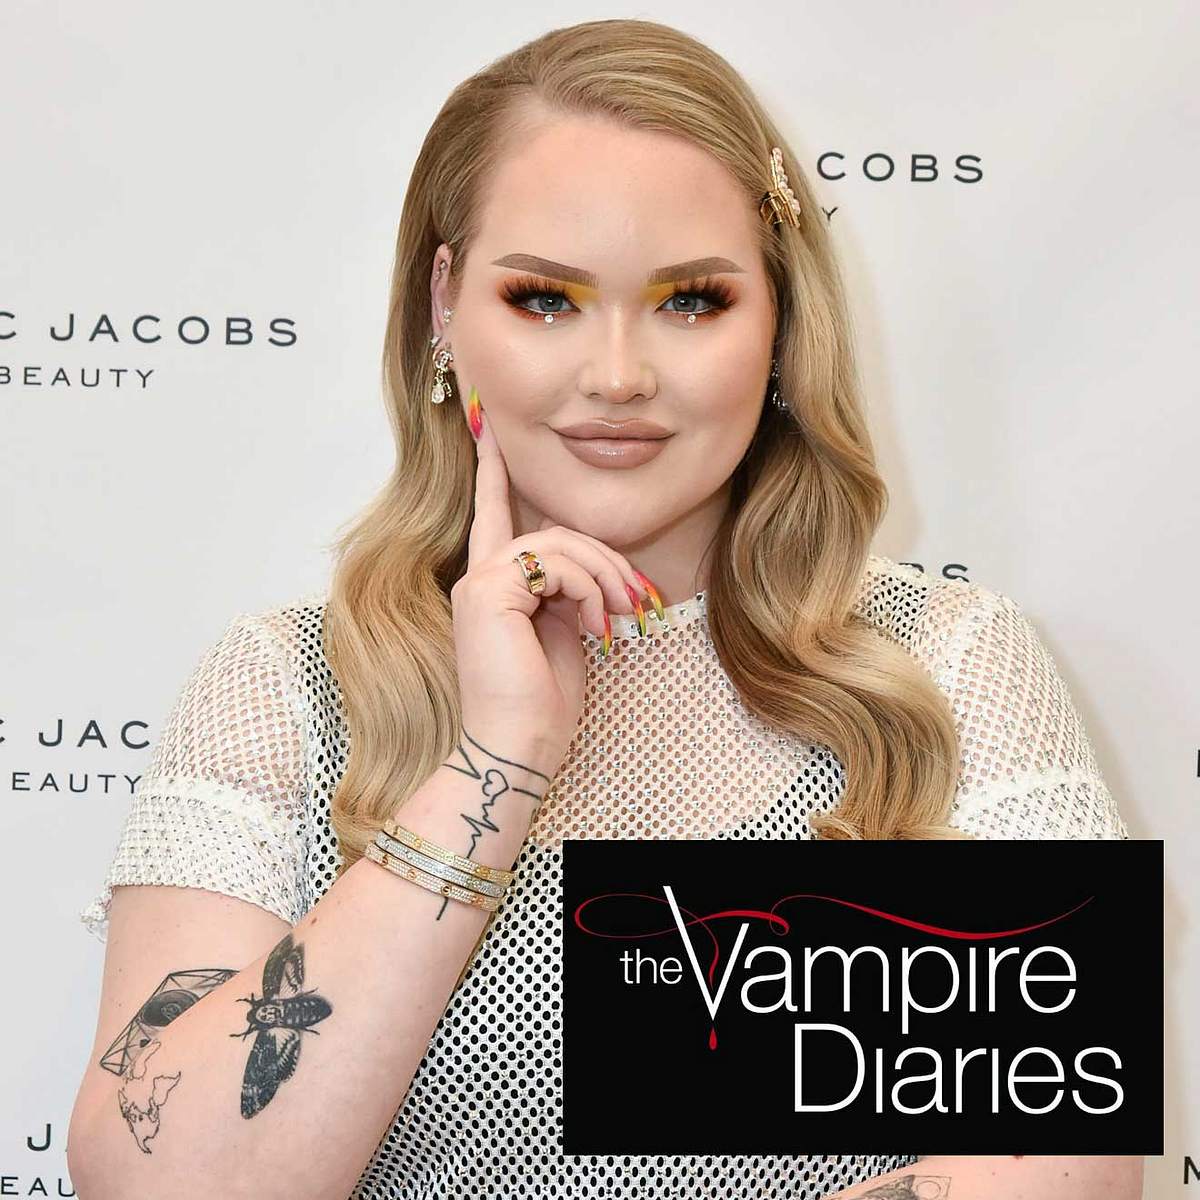 Beauty-YouTuberin Nikkie Tutorials bei „The Vampire Diaries“